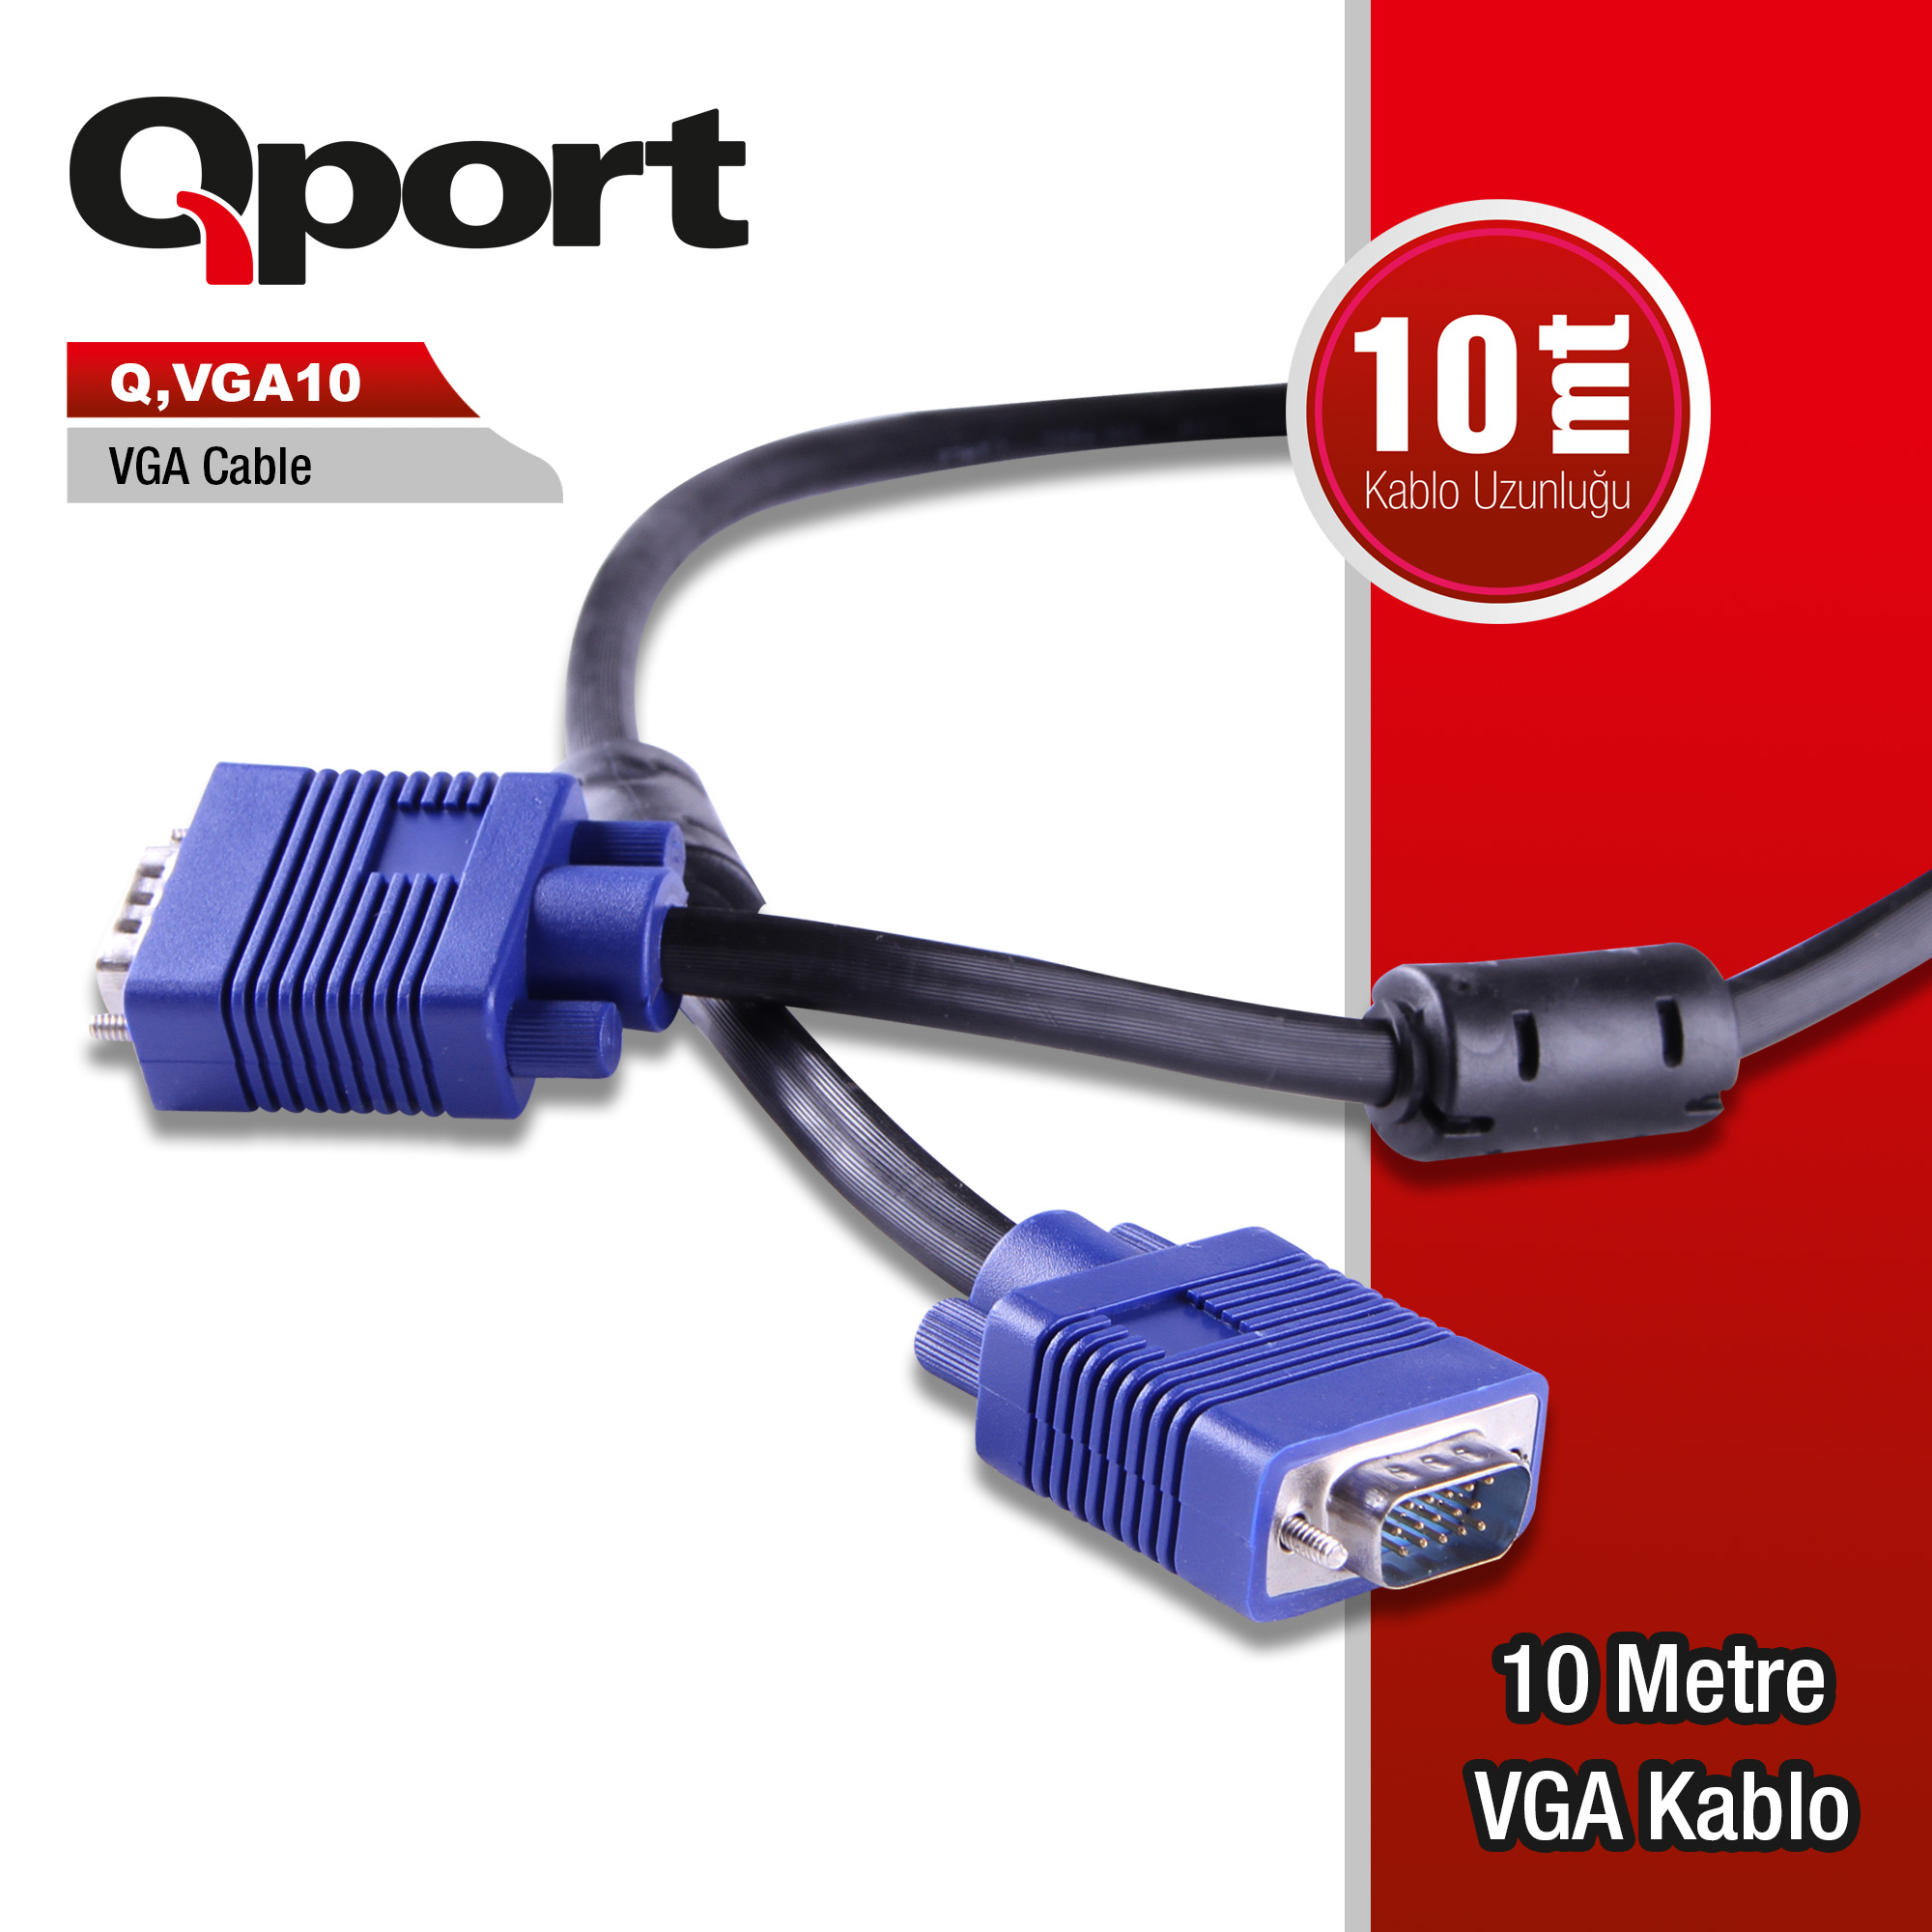 QPORT Q-VGA10 10M 15PIN VGA KABLO